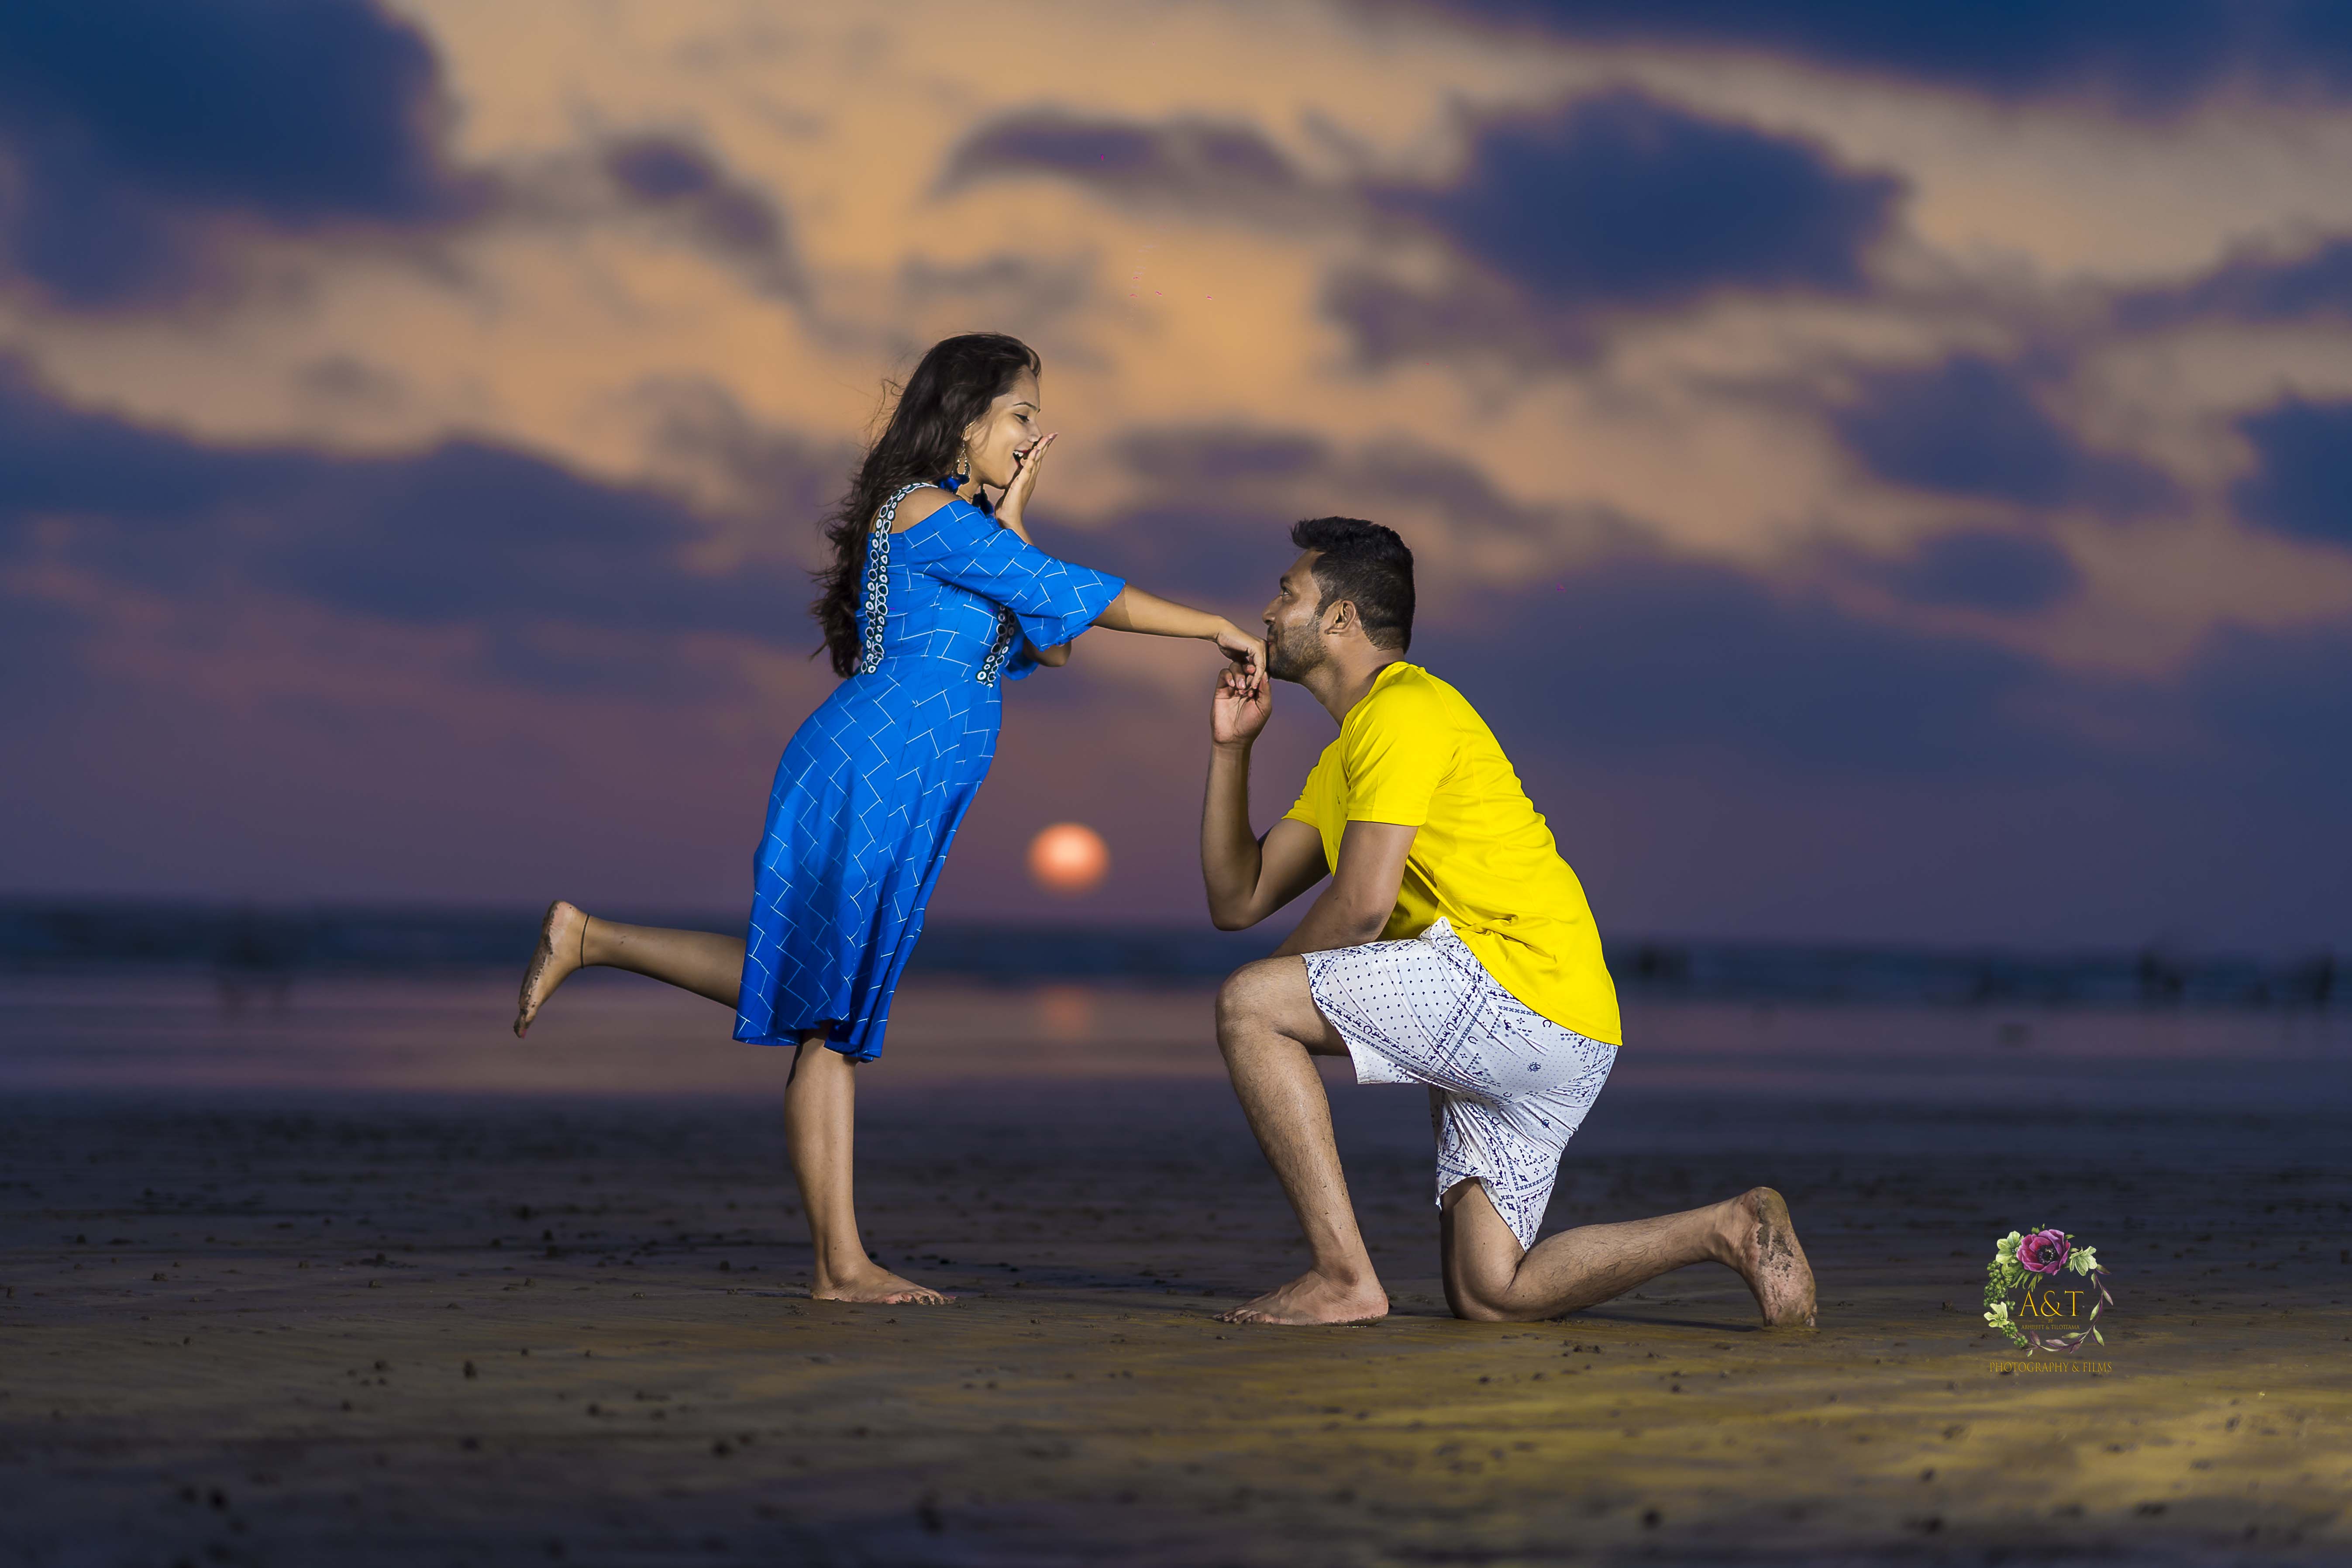 Prewedding poses: propose her on romantic evening